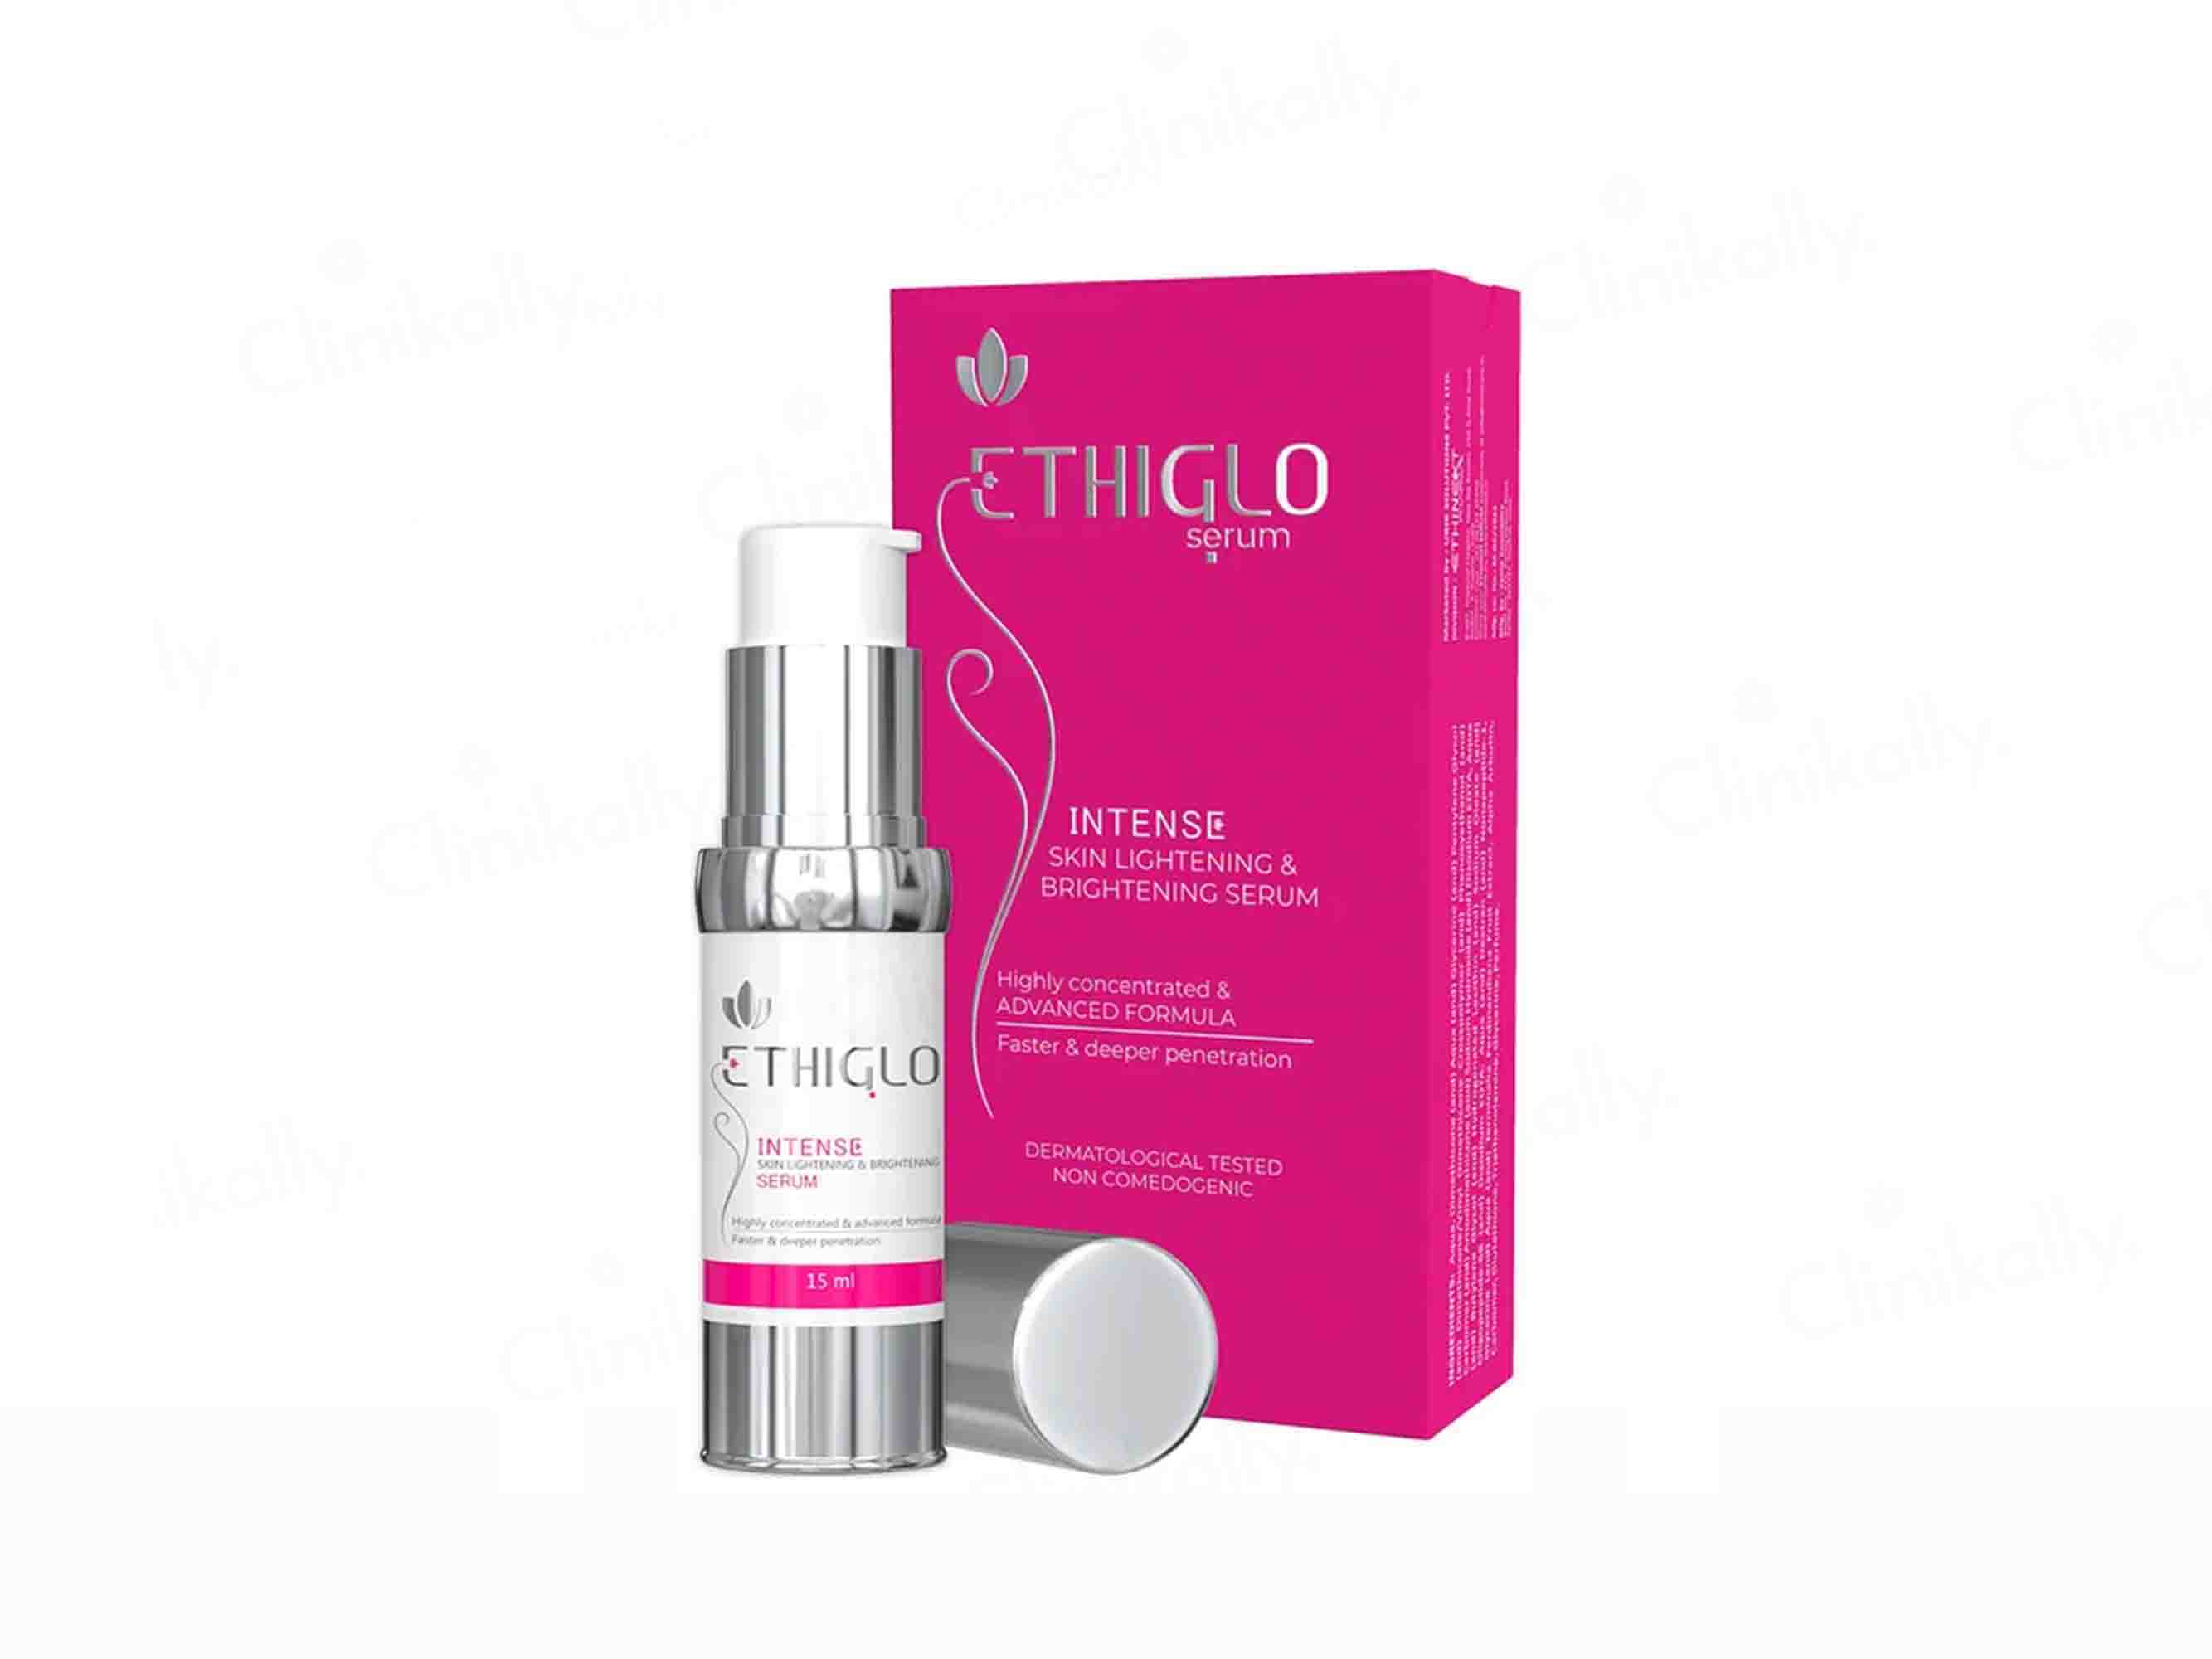 Ethiglo Intense Skin Lightening & Brightening Serum - Clinikally